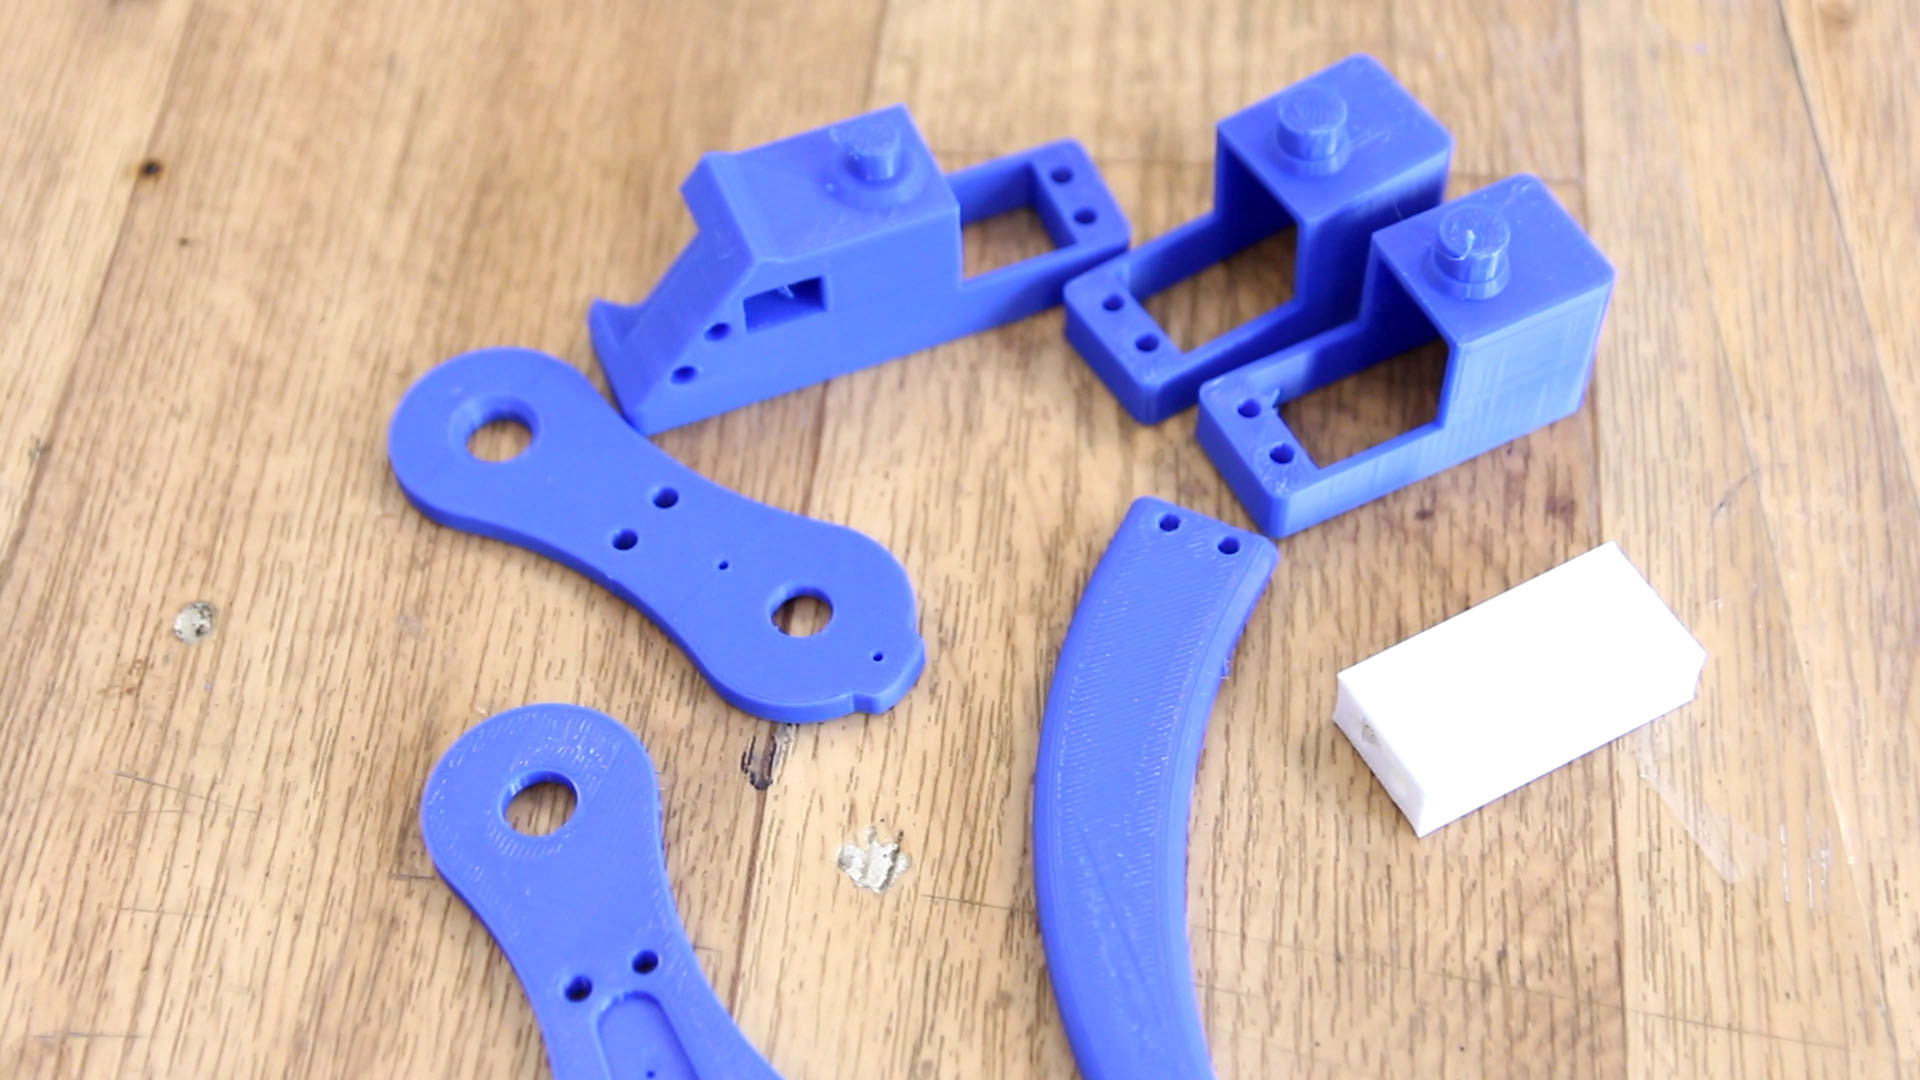 3D printed hexapod Arduino MEGA